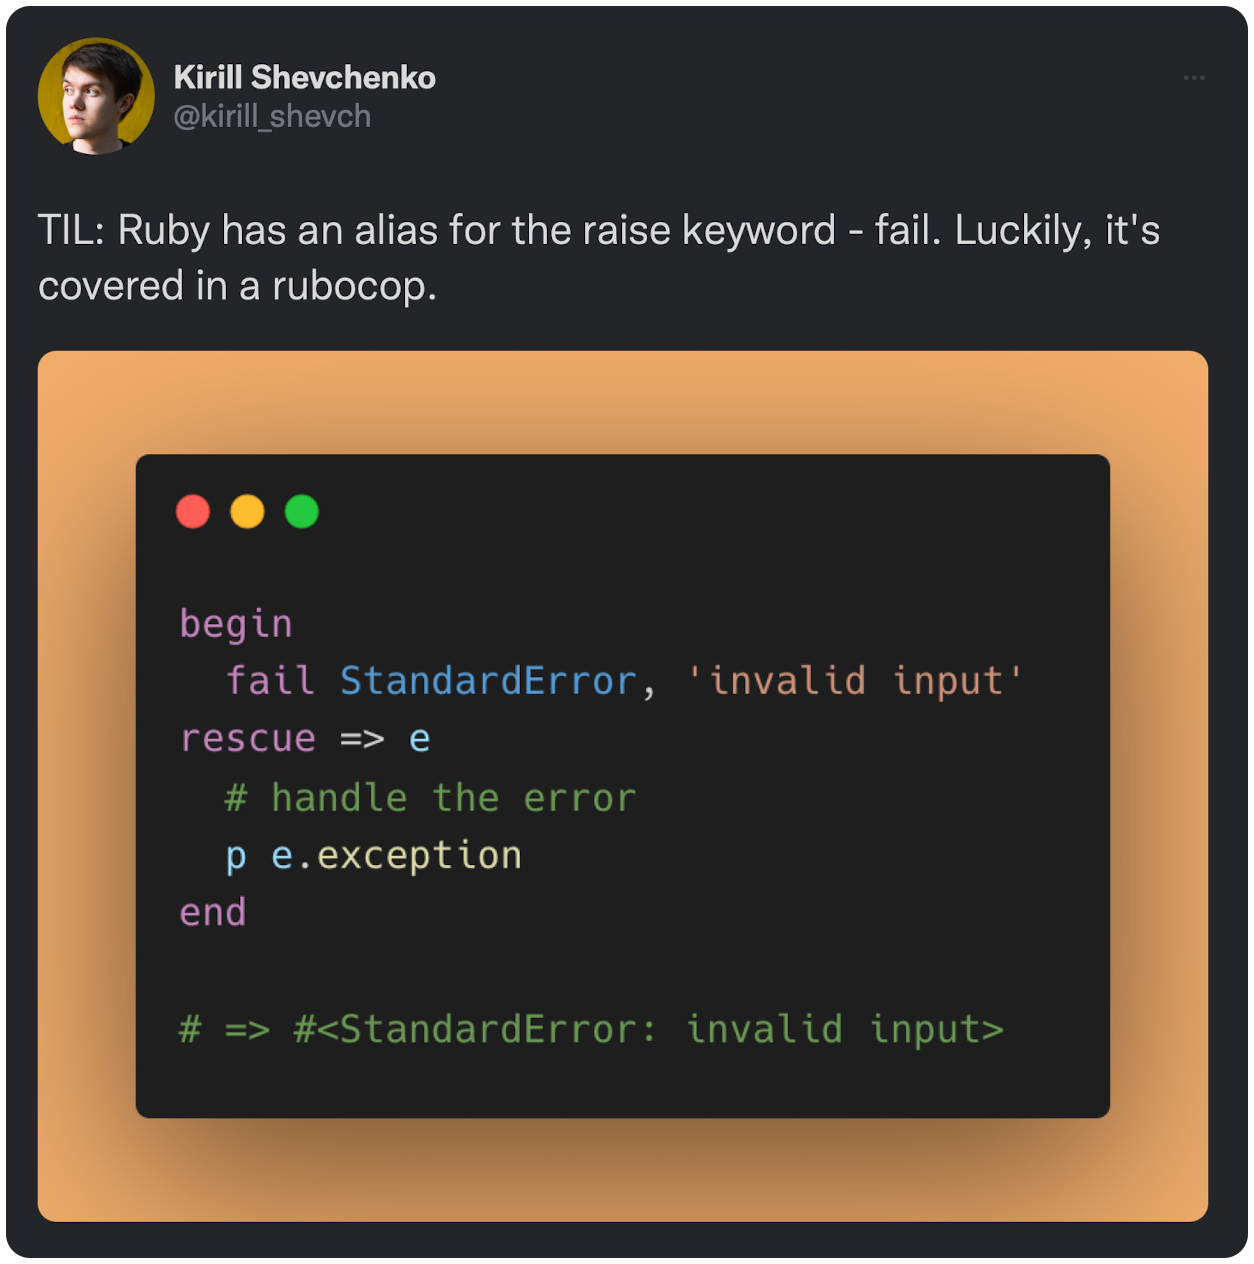 TIL: Ruby has an alias for the raise keyword - fail. Luckily, it's covered in a rubocop.